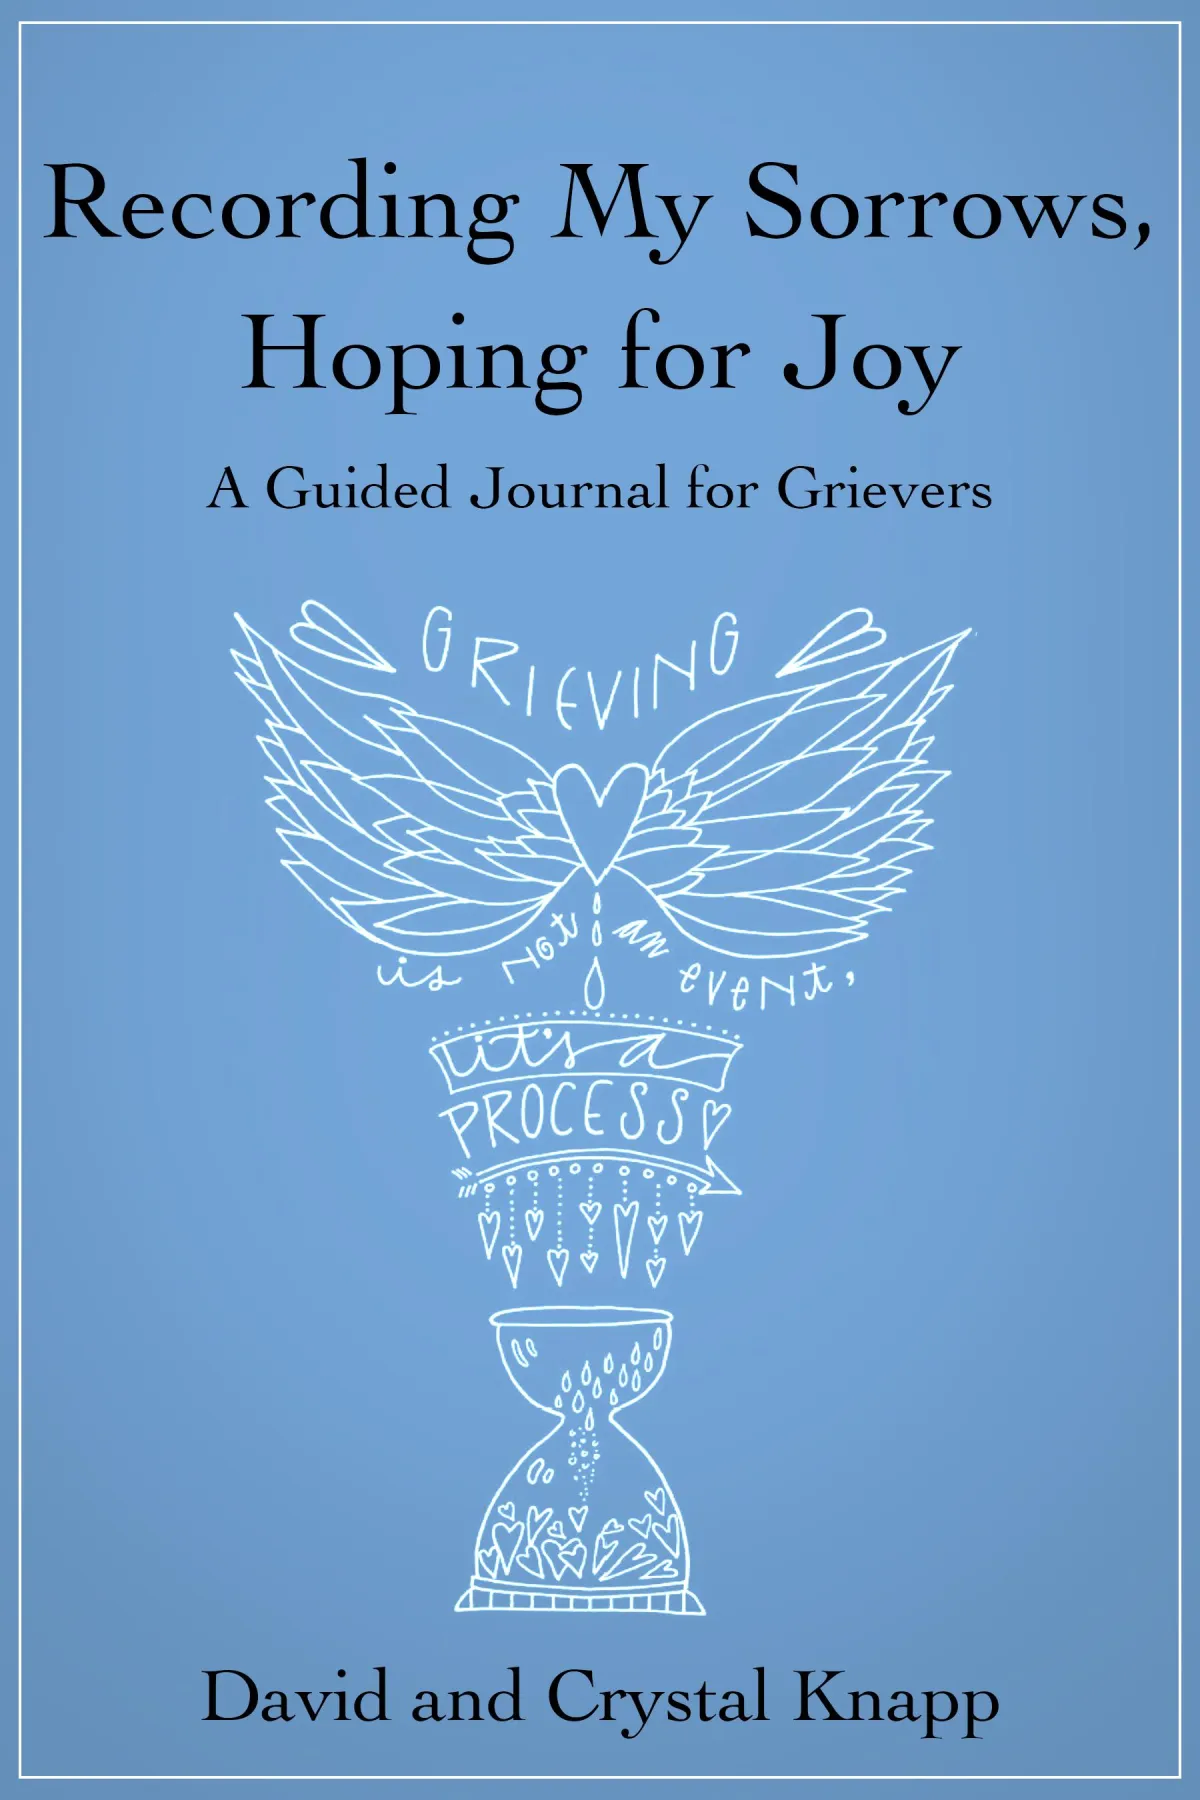 Recording My Sorrows, Hoping for Joy by David and Crystal Knapp